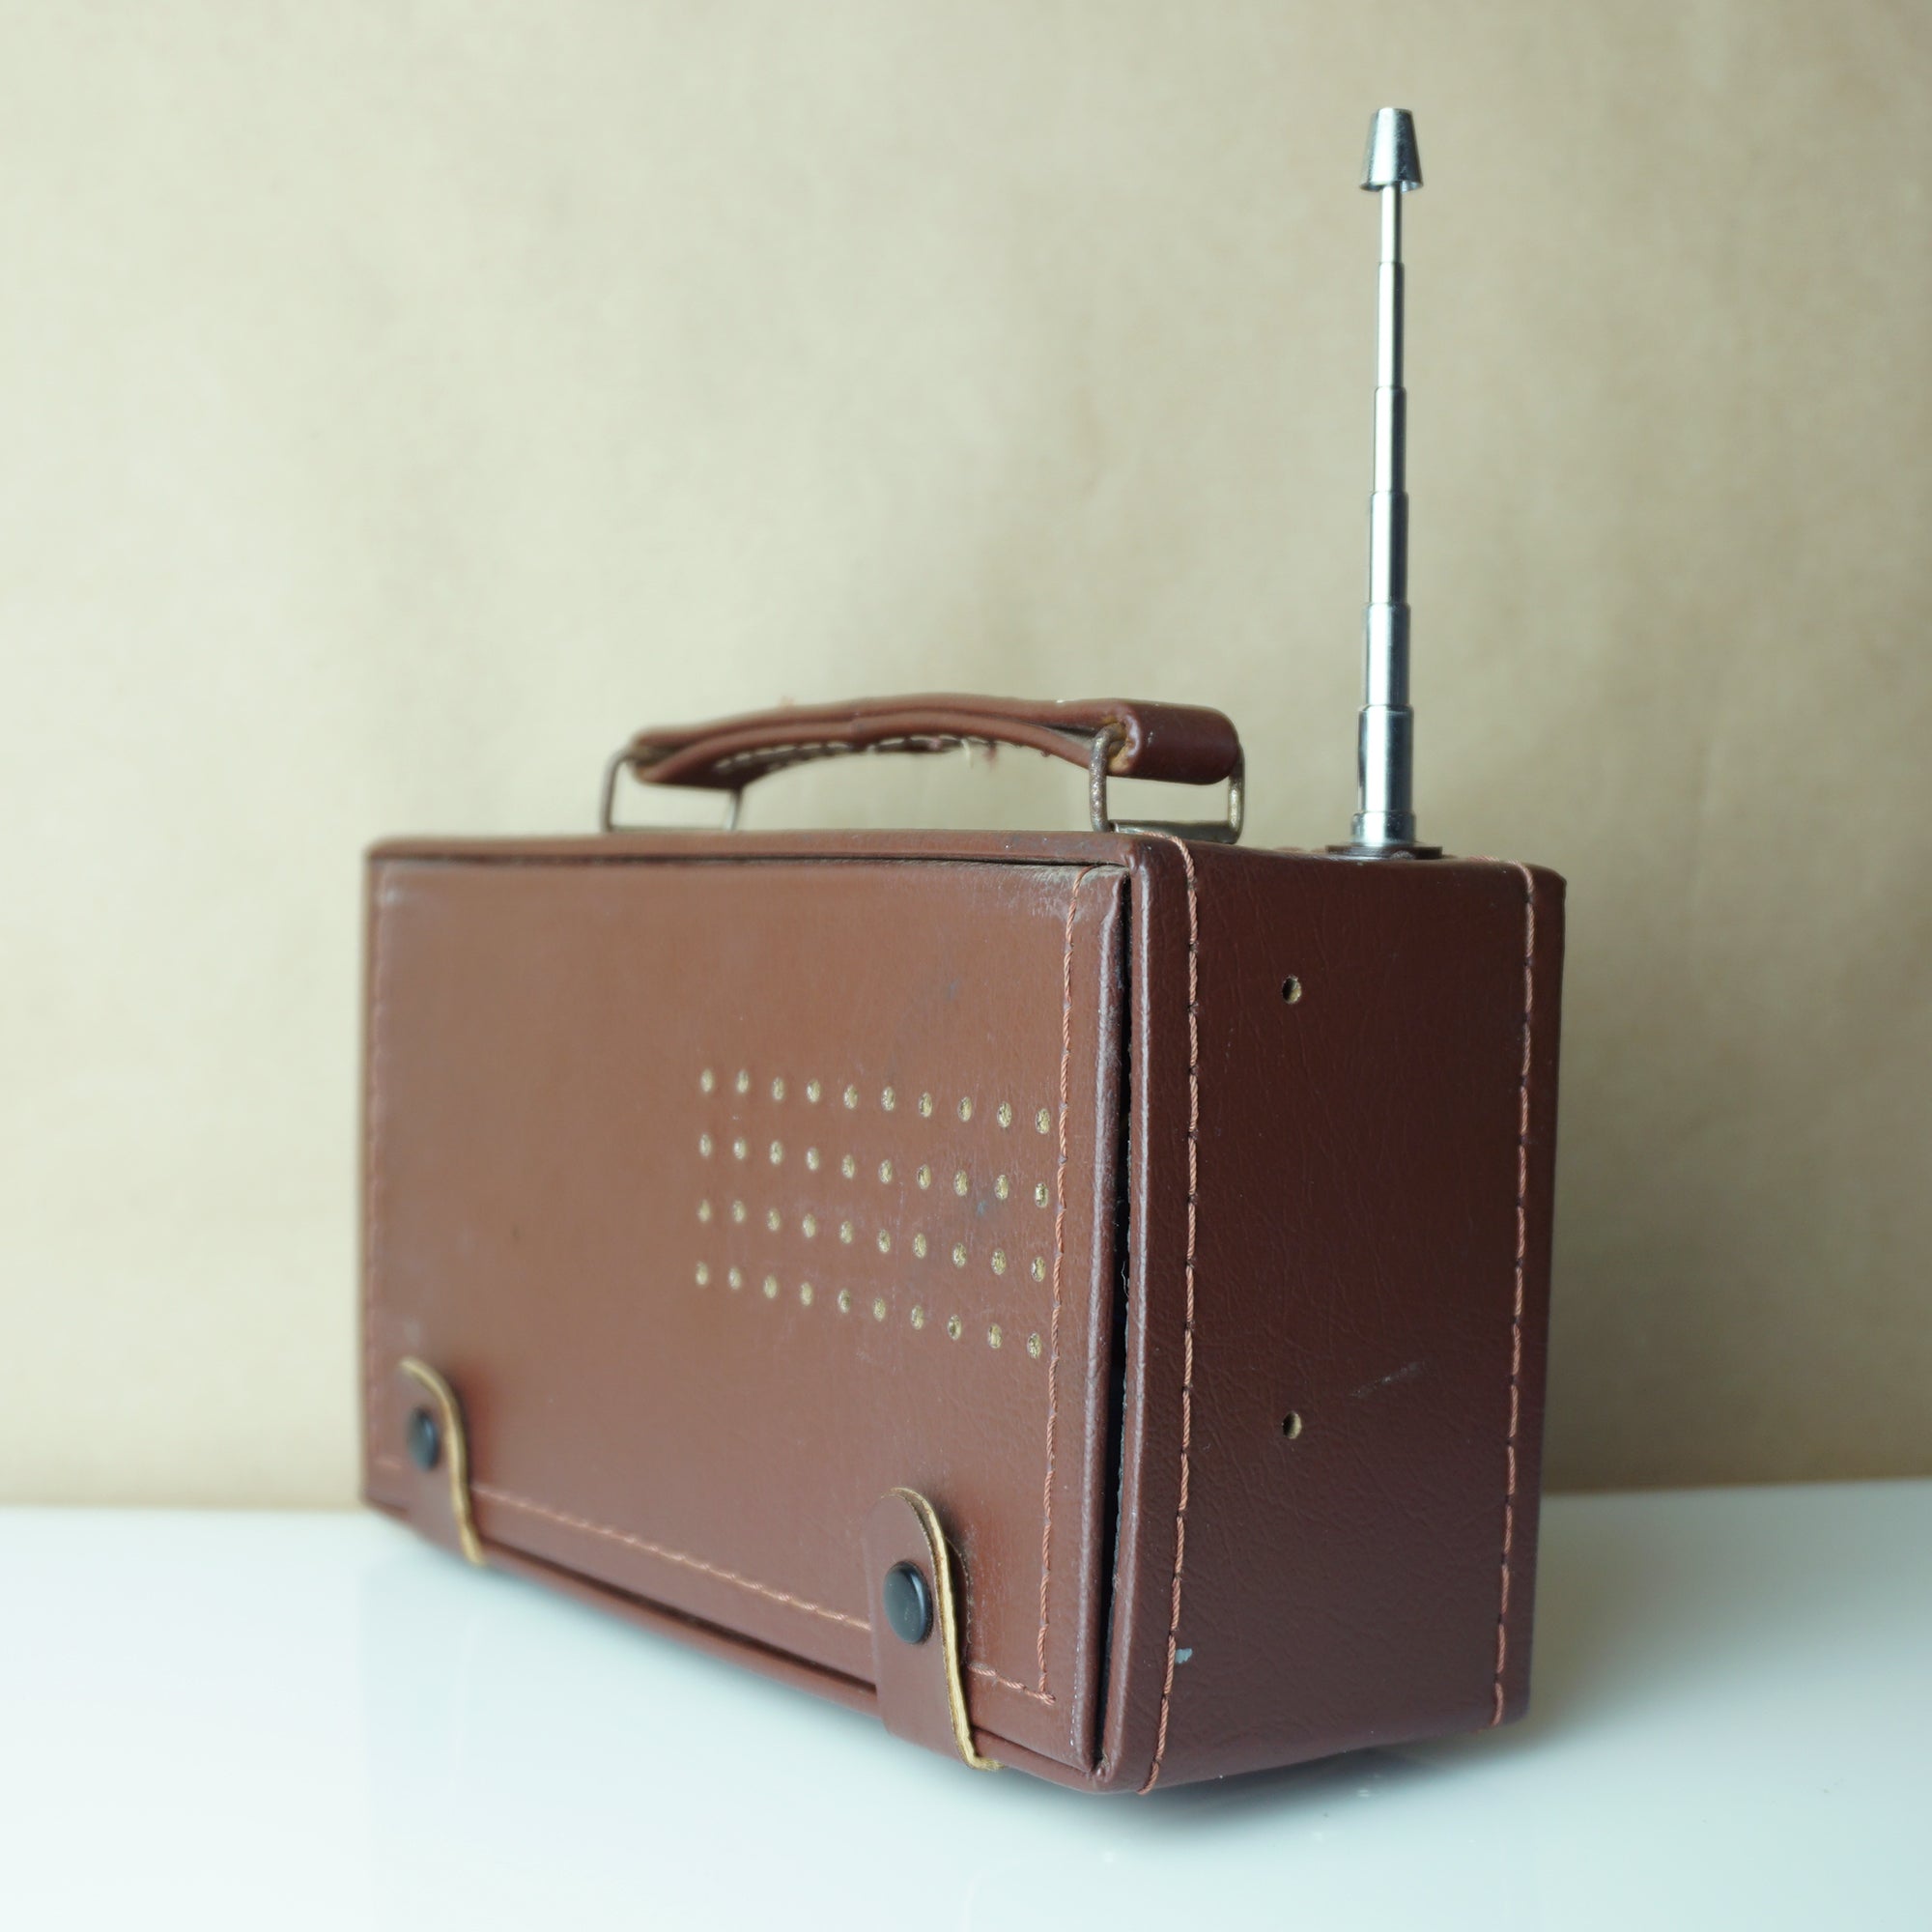 1960s Vintage SILVANO Radio w/ Bluetooth Technology. Brown Leather Case 8 Transistor Radio.